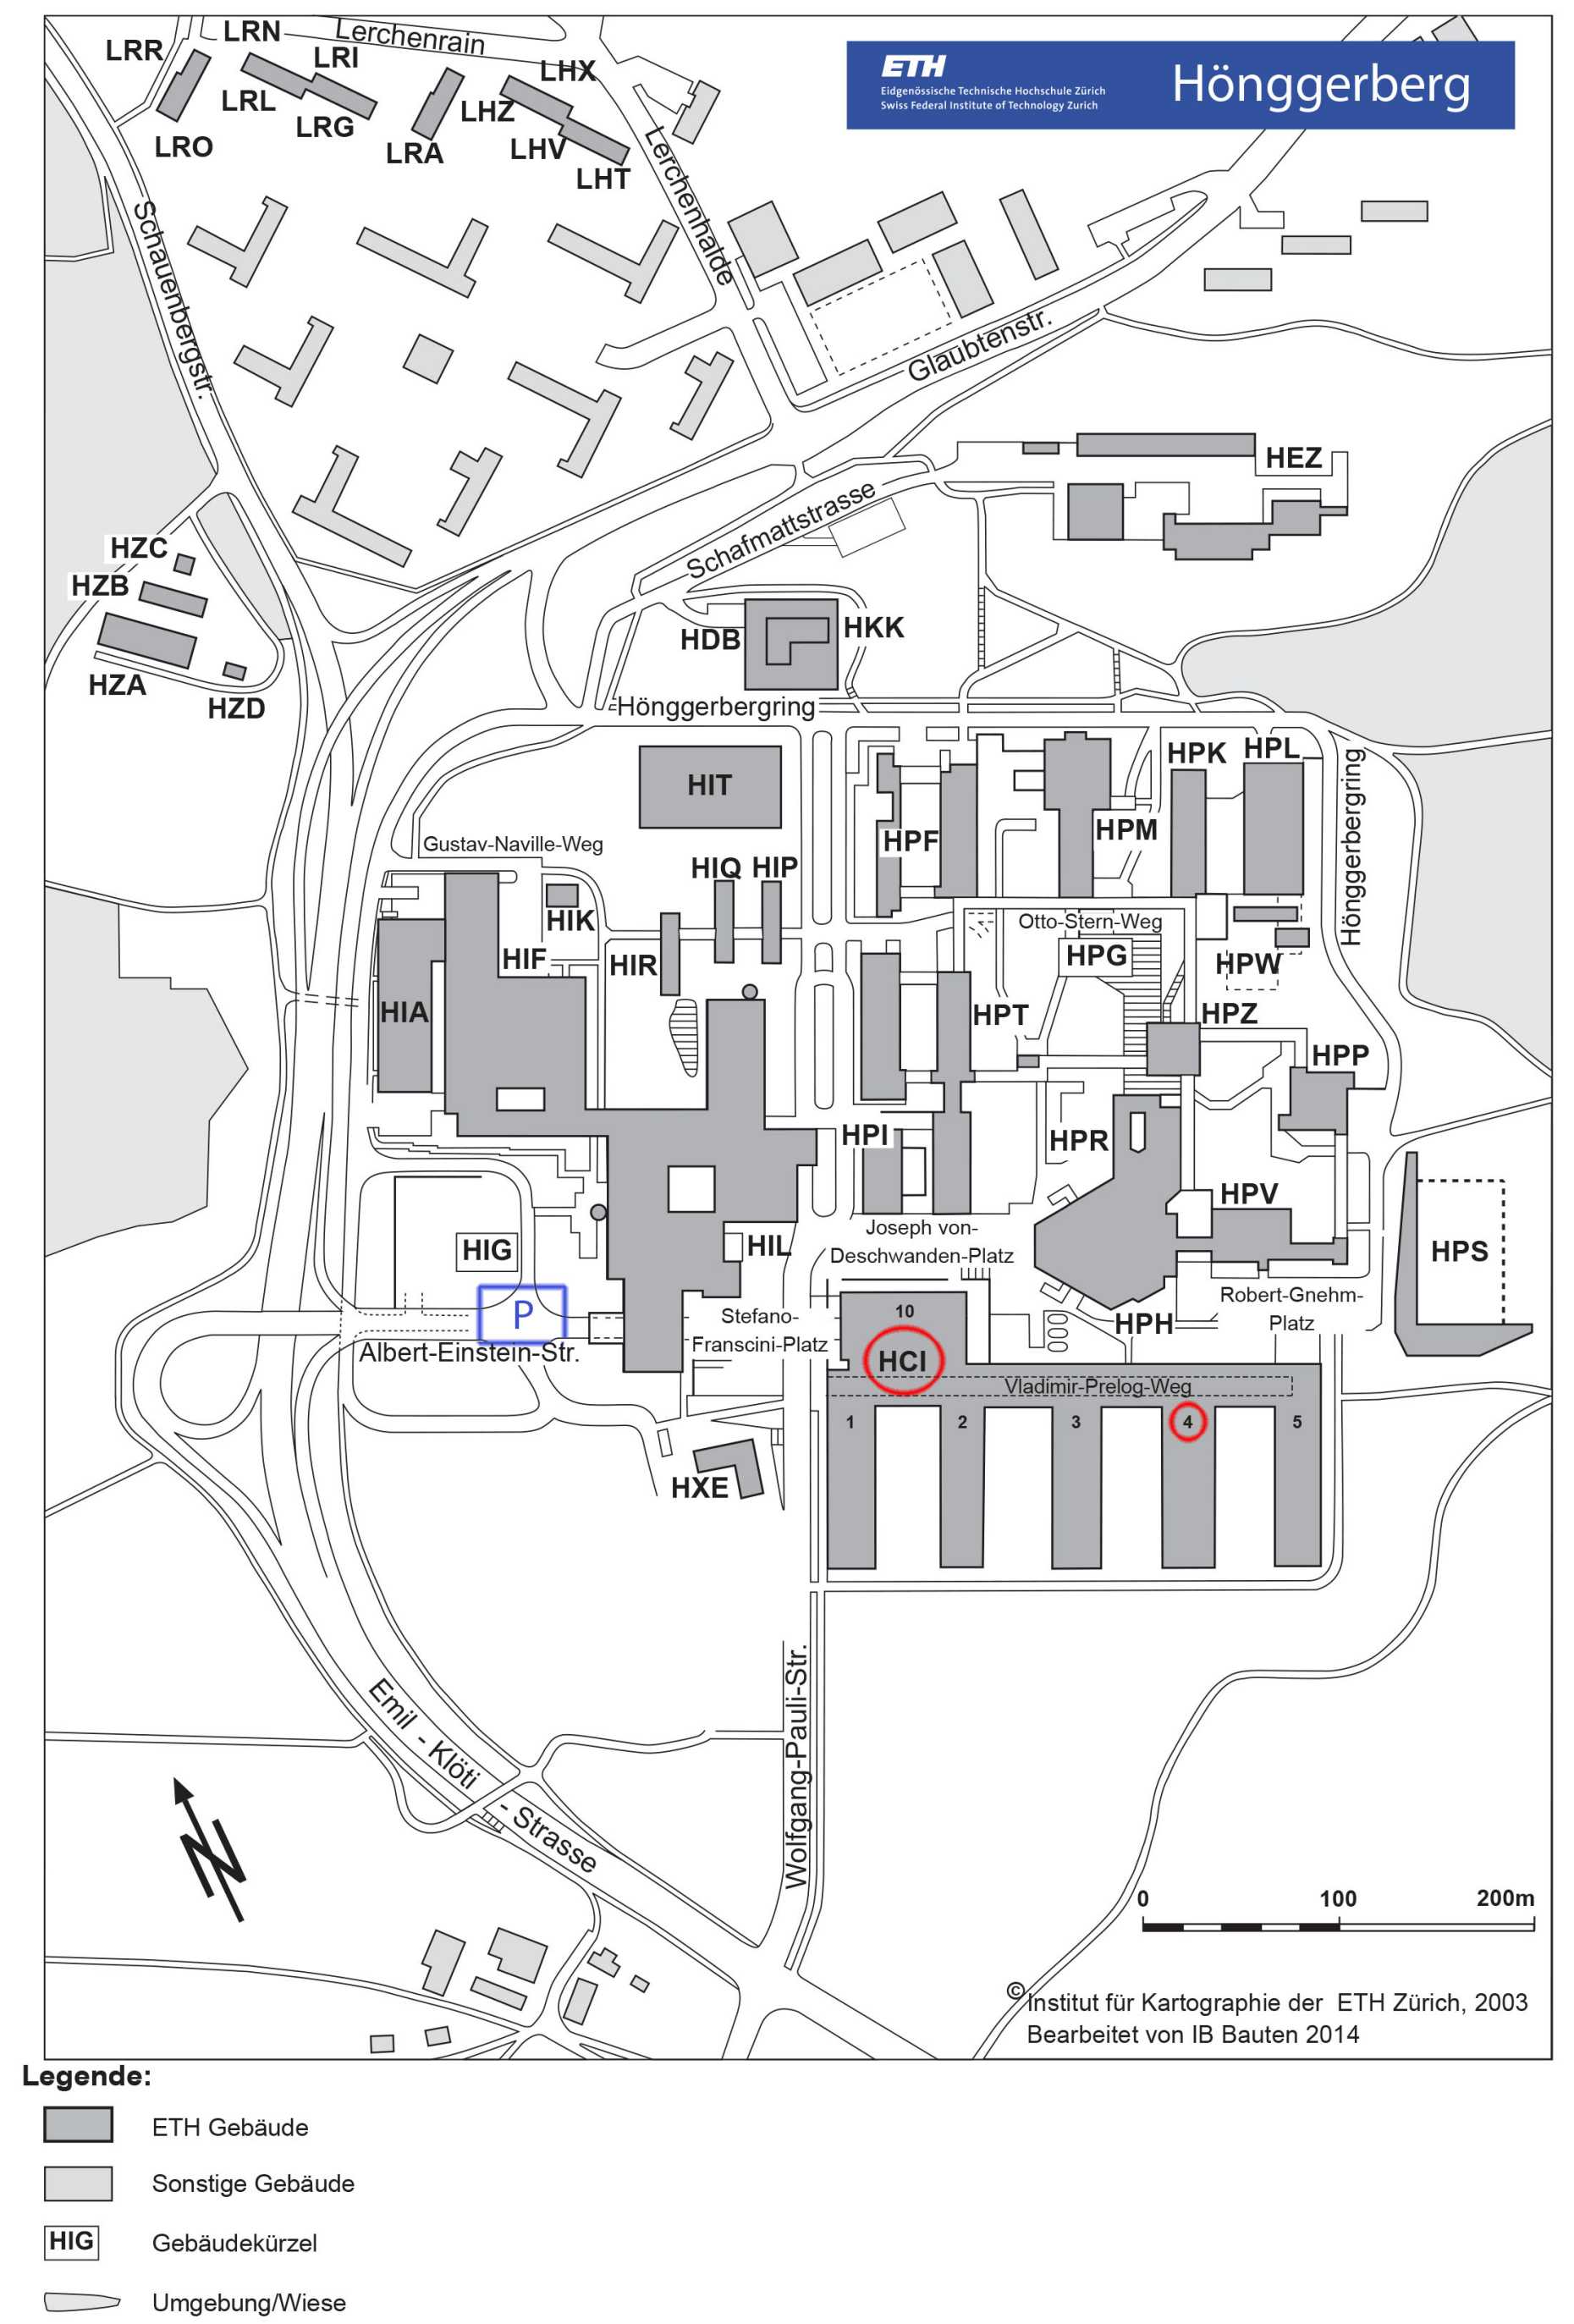 Enlarged view: map of honggerberg